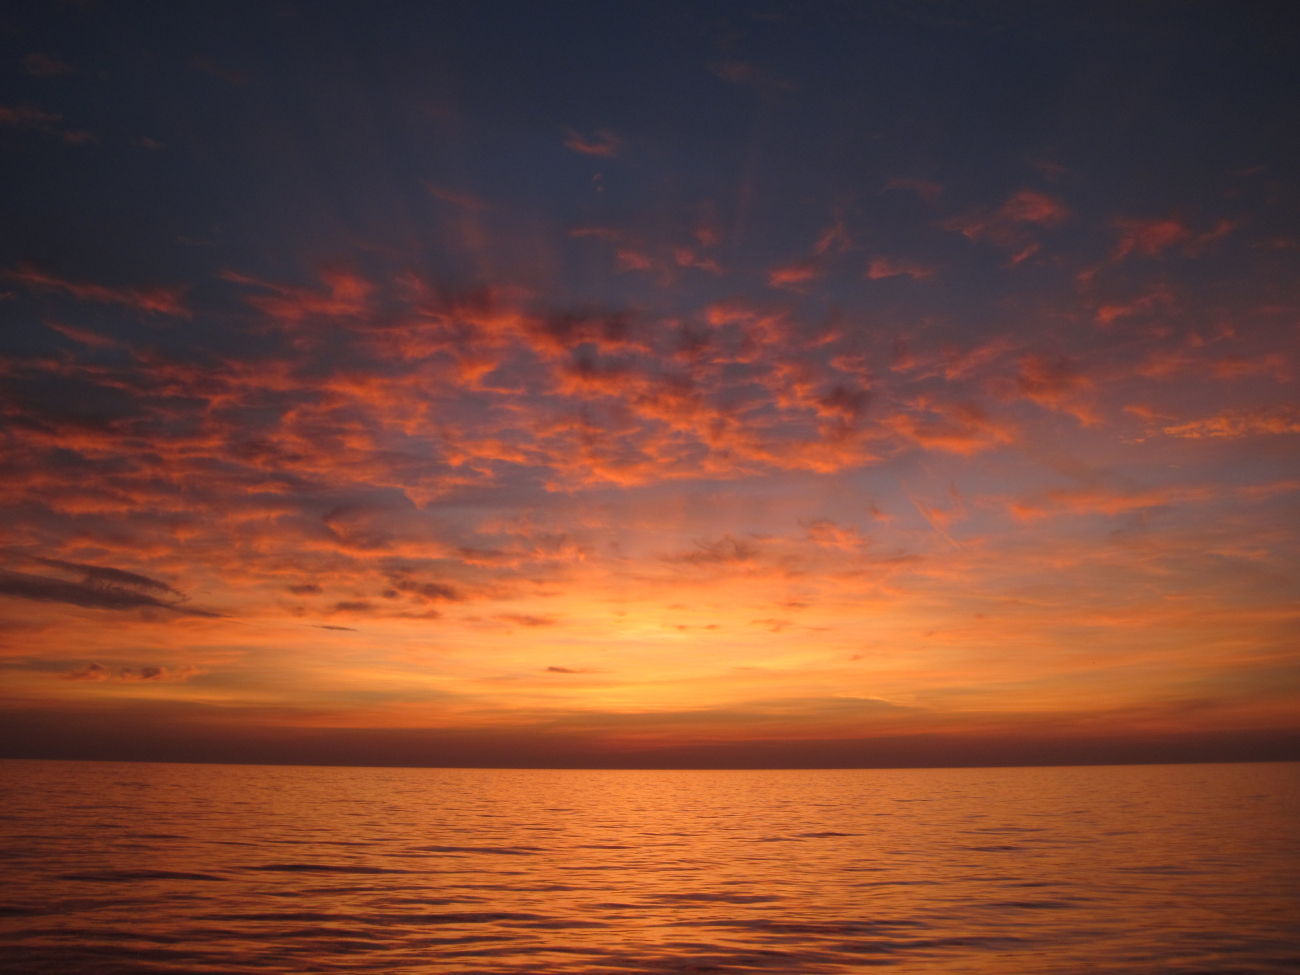 Red sky at morning, sailor take warning